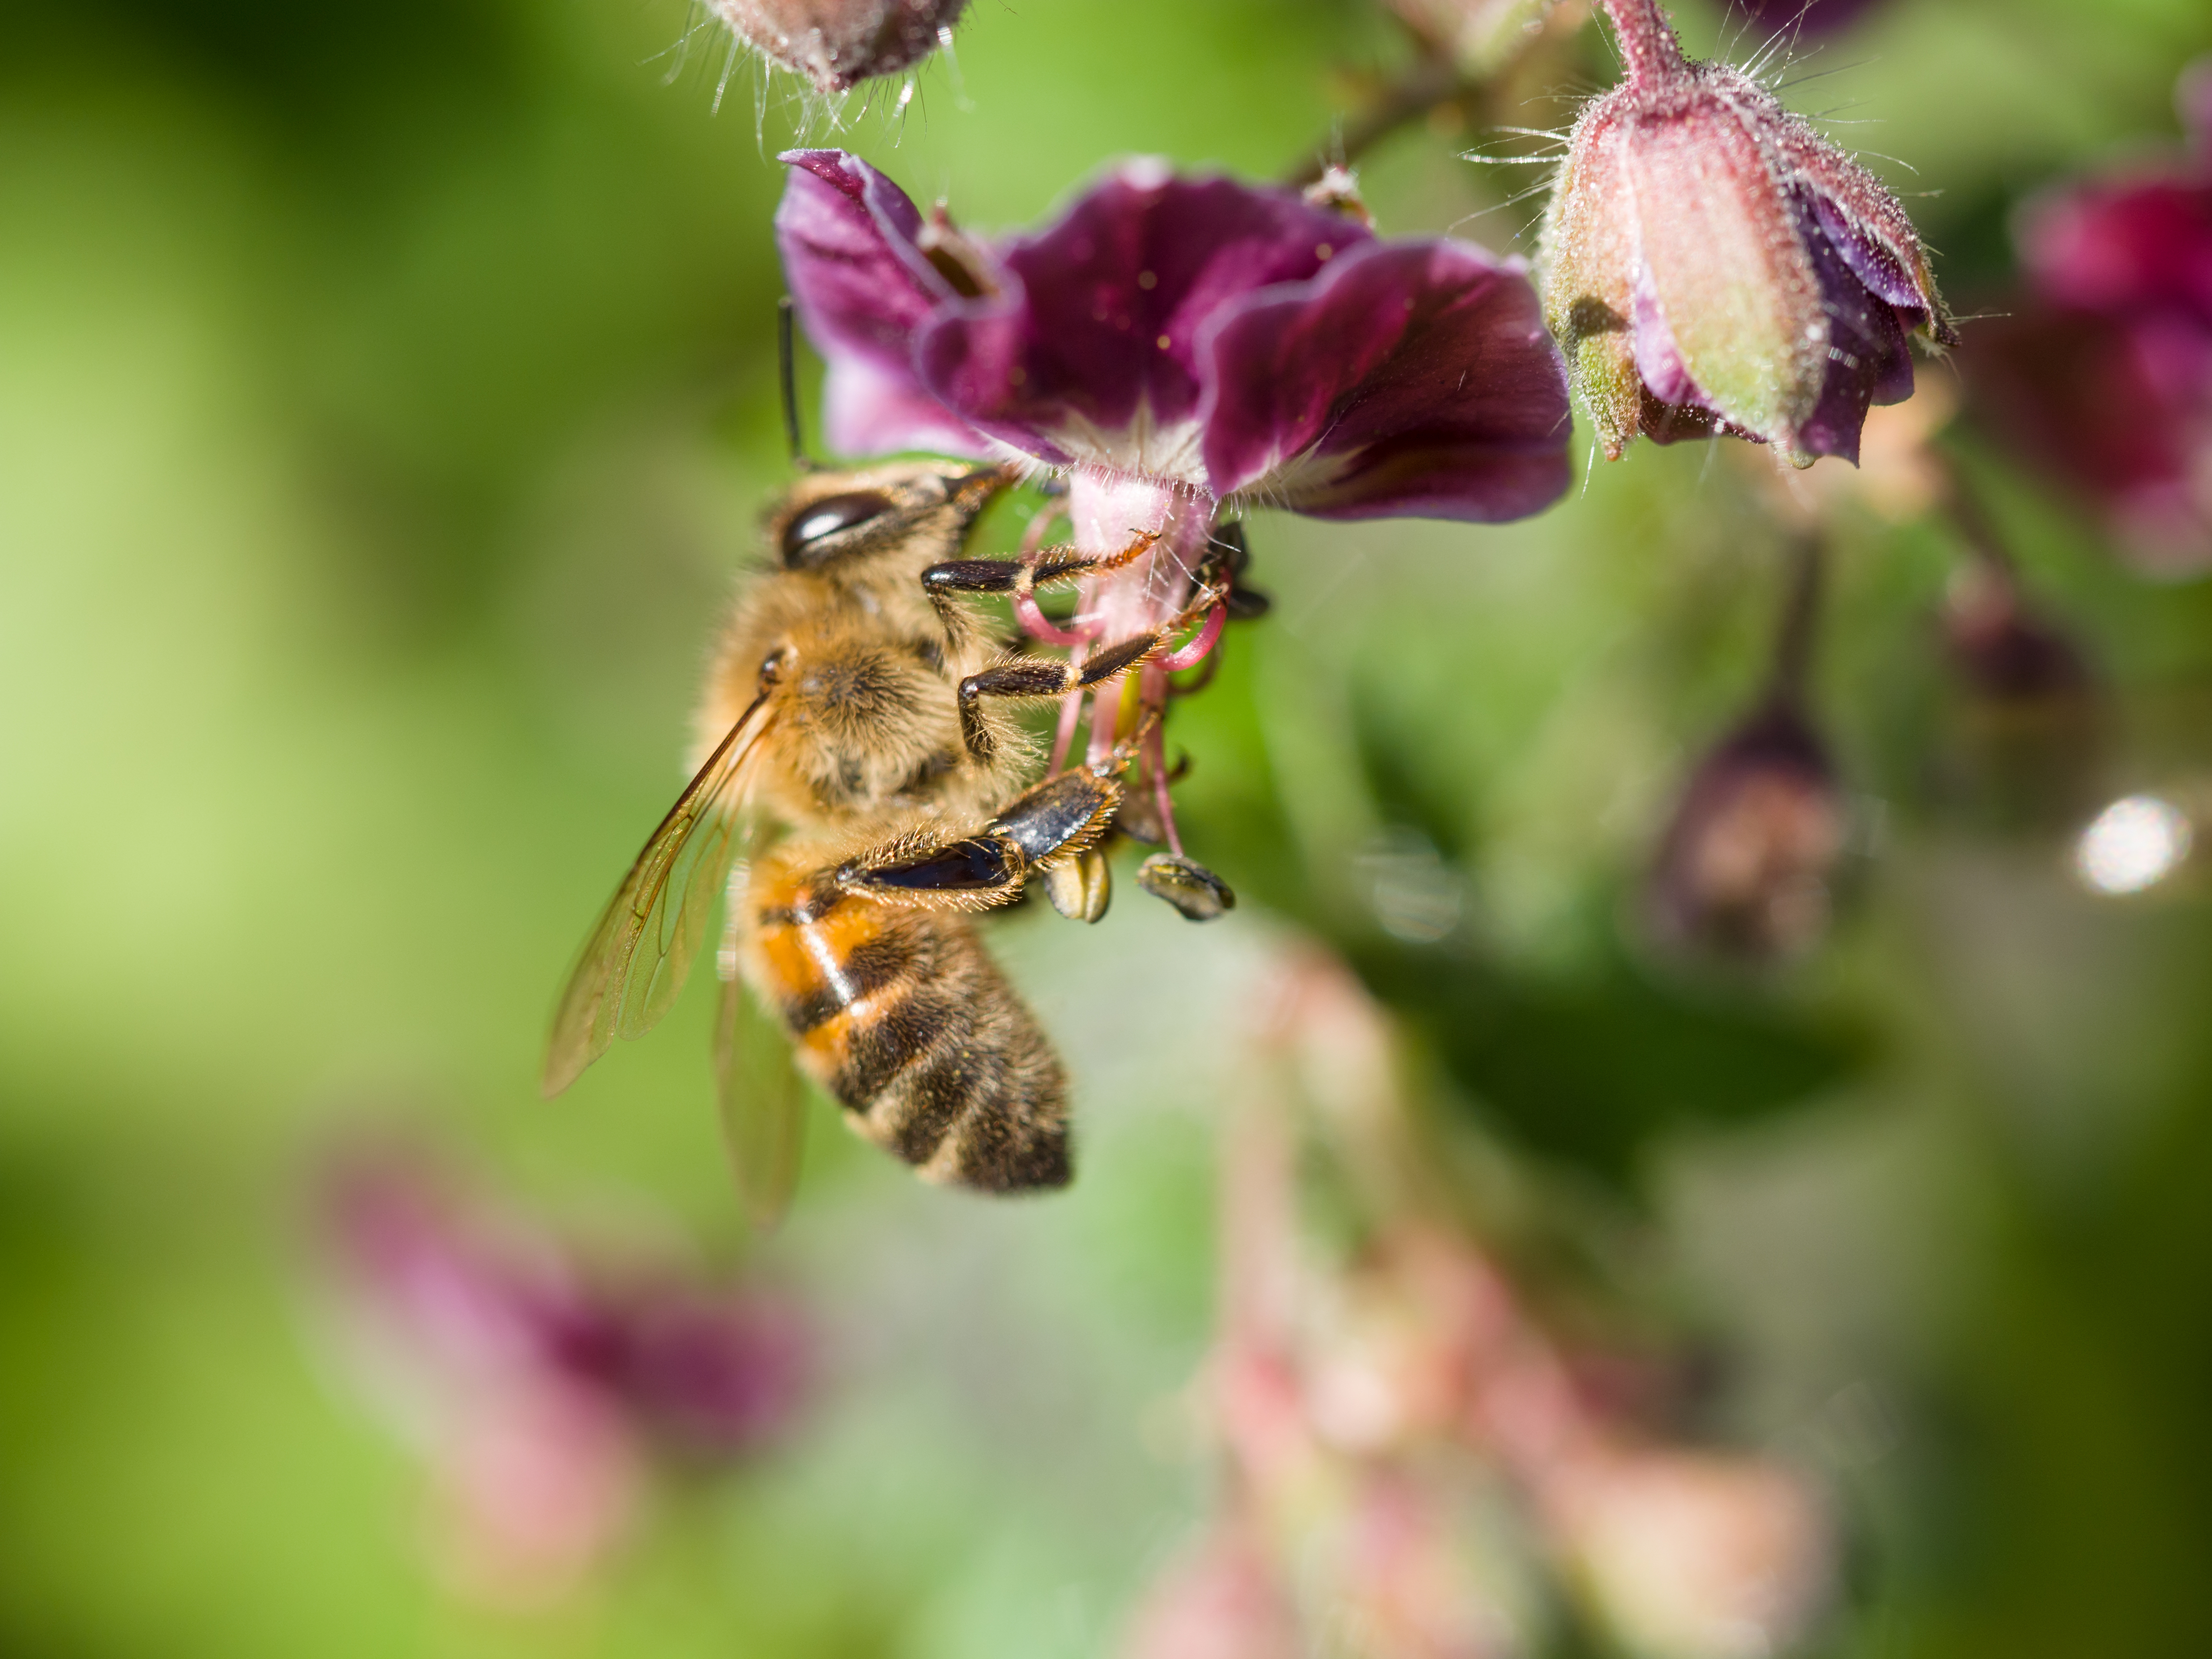 File:Bee gathering nectar (14117808765).jpg - Wikimedia Commons